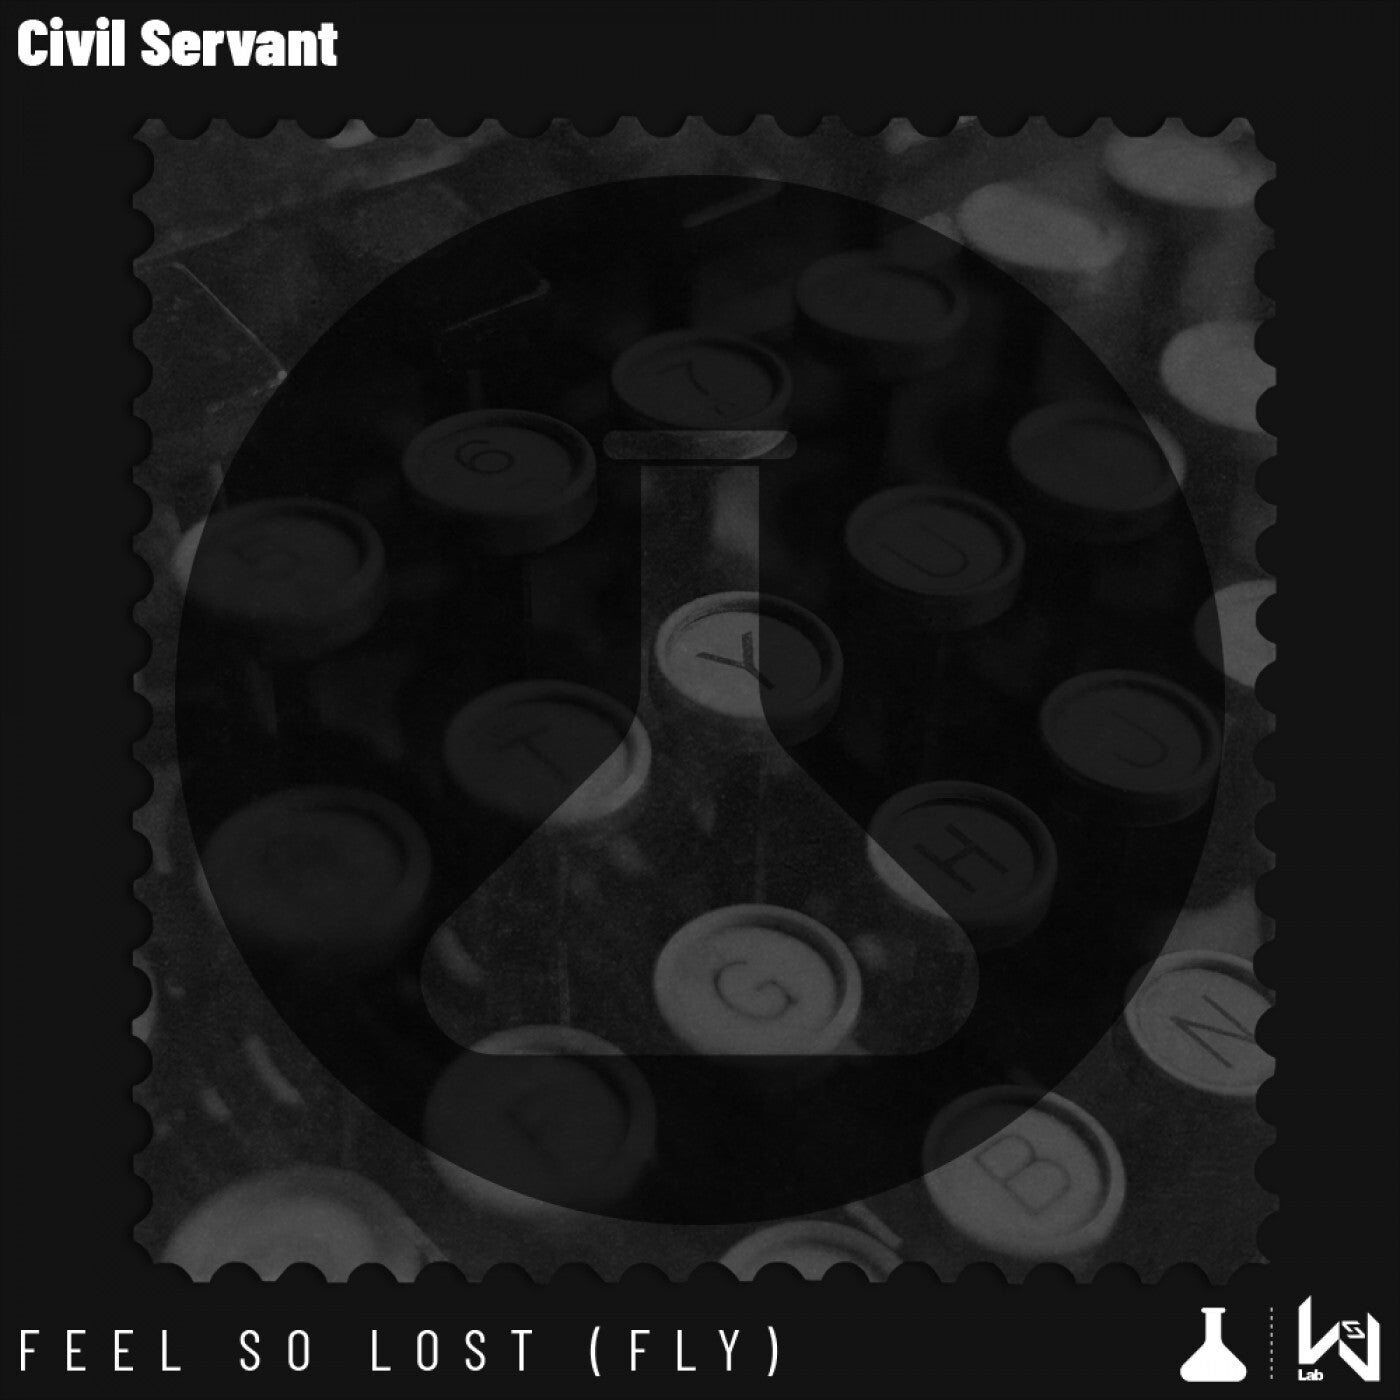 Civil Servant – Feel so Lost (Fly) [WSL063]